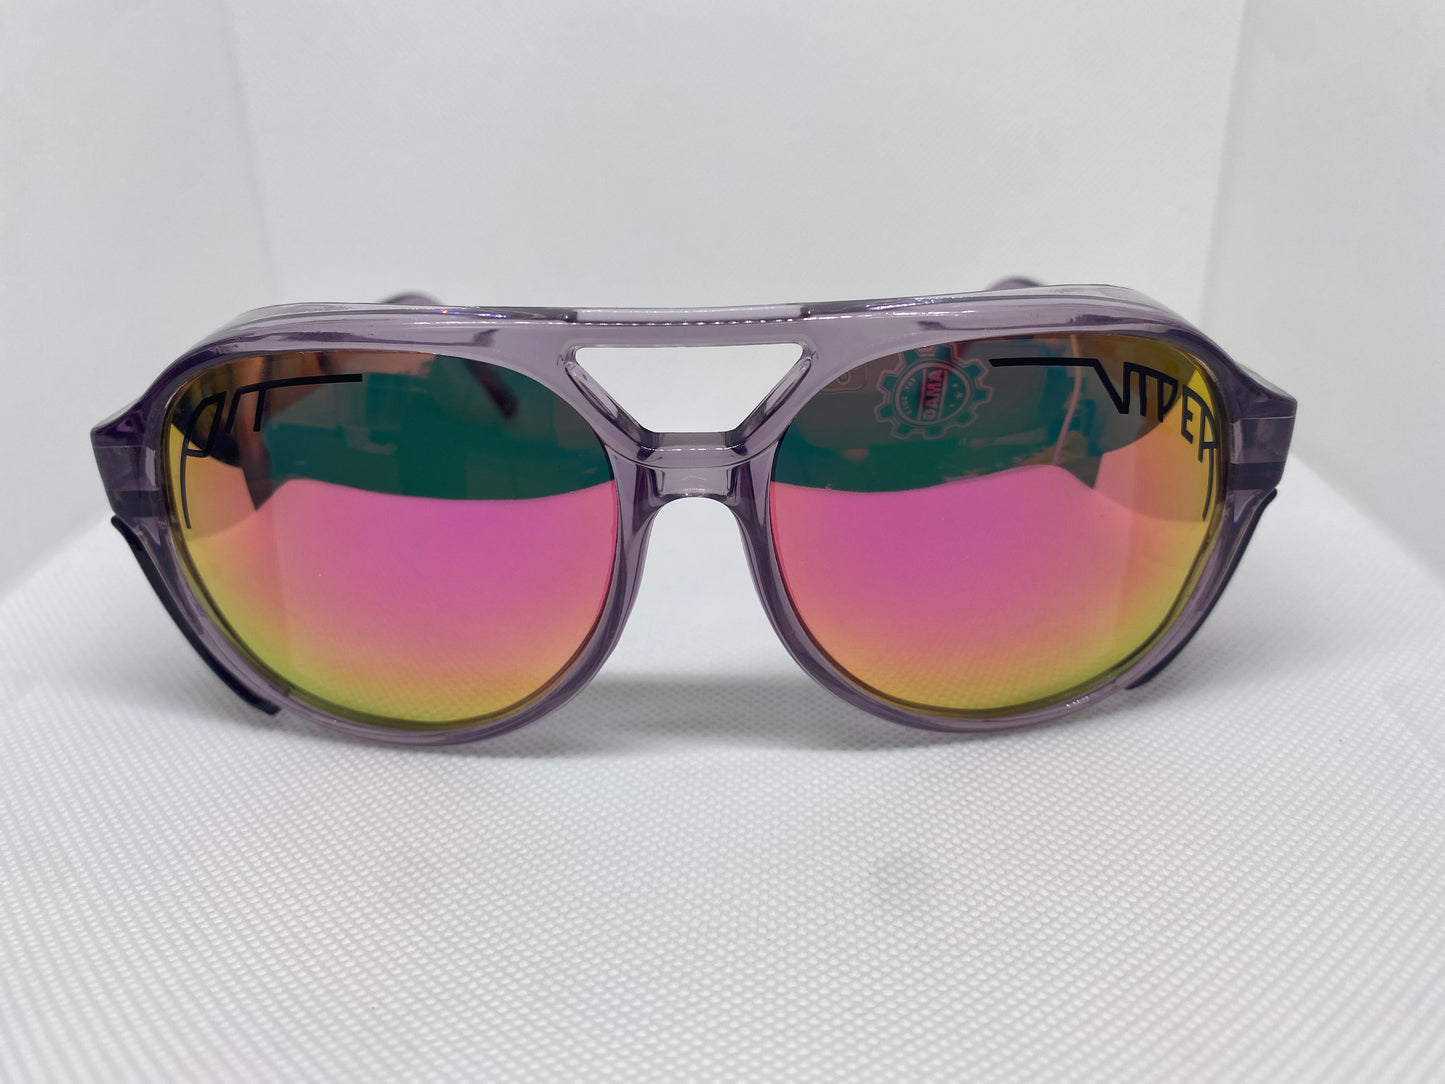 Pit Viper Sunglasses